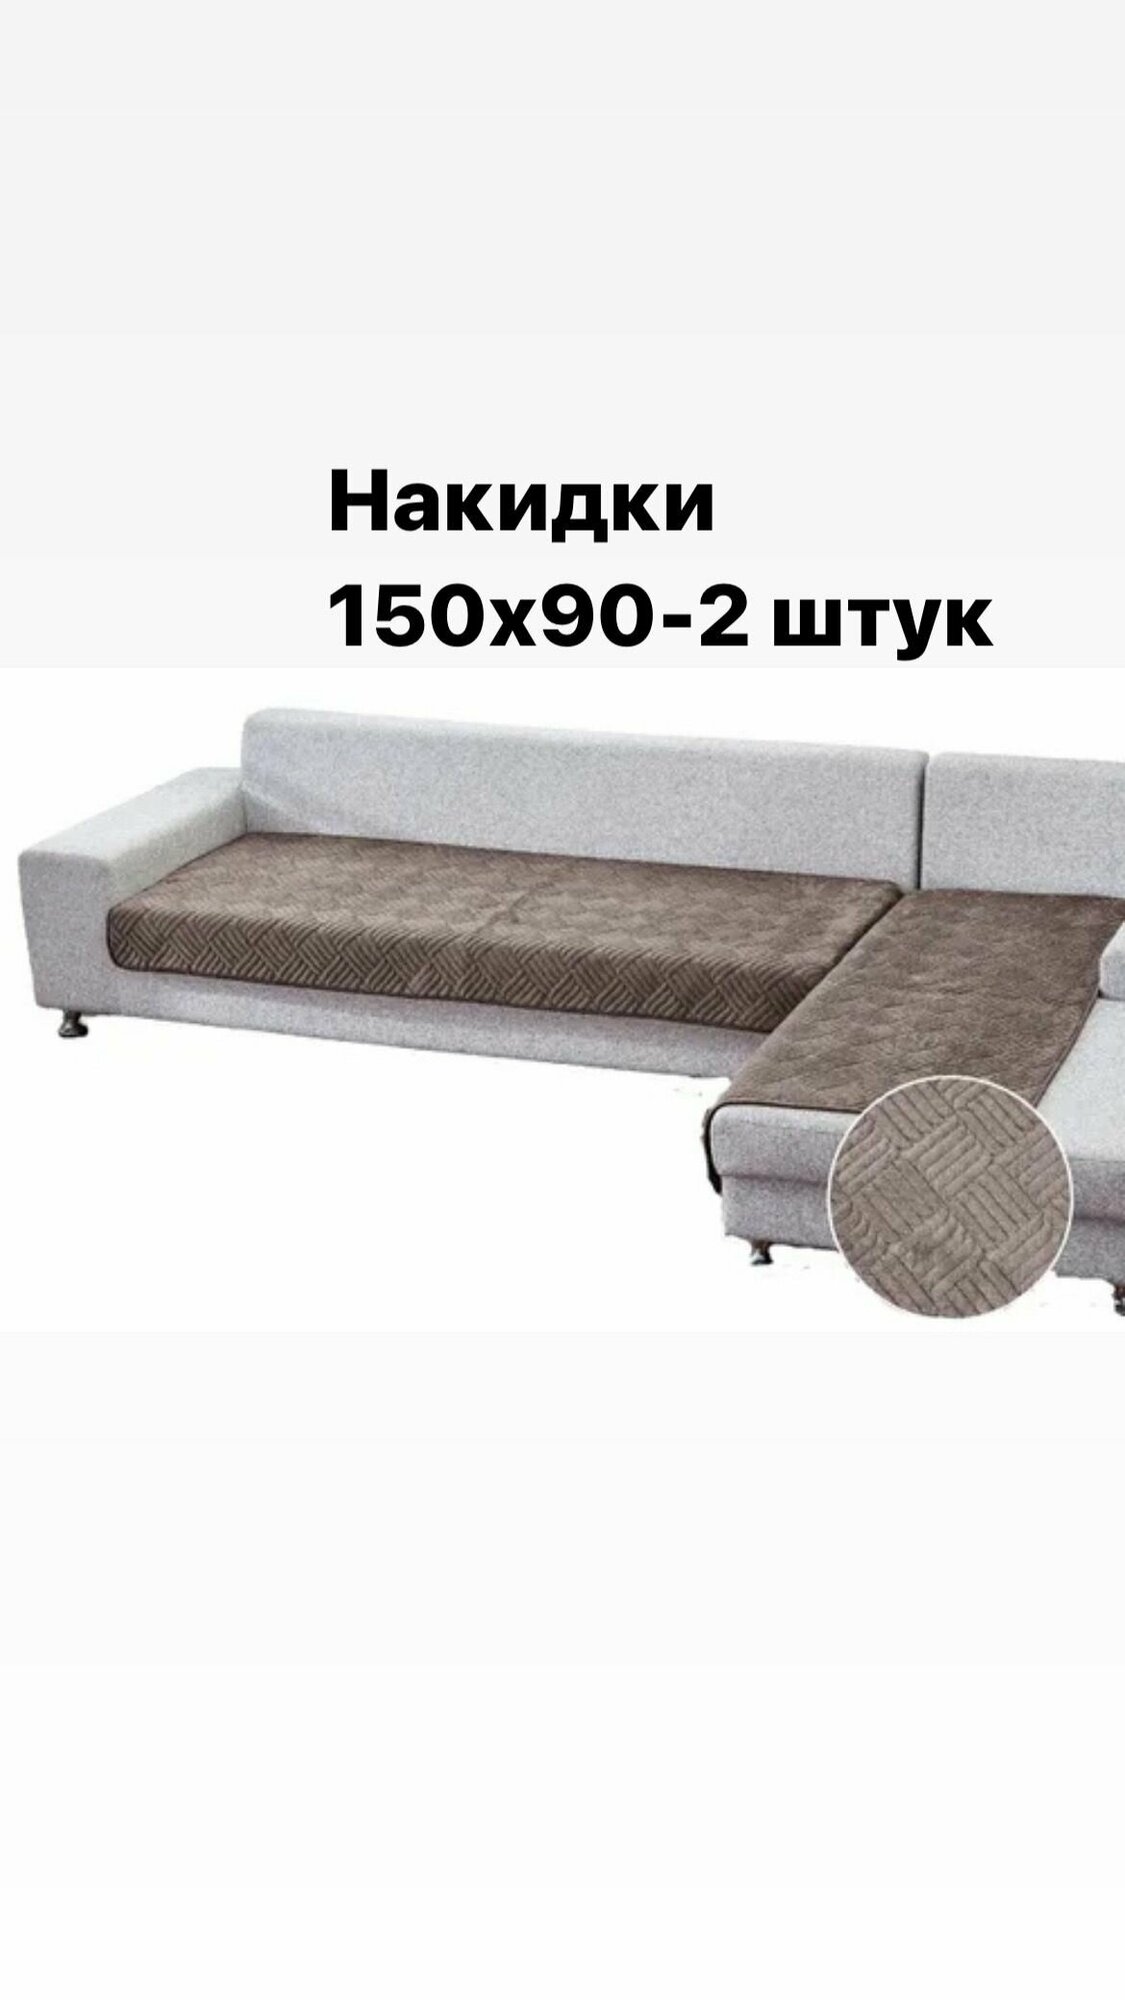 Дивандеки накидки на угловой диван 90х150 см - 2 шт чехол на угловой диван покрывало на угловой диван чехлы для мебели